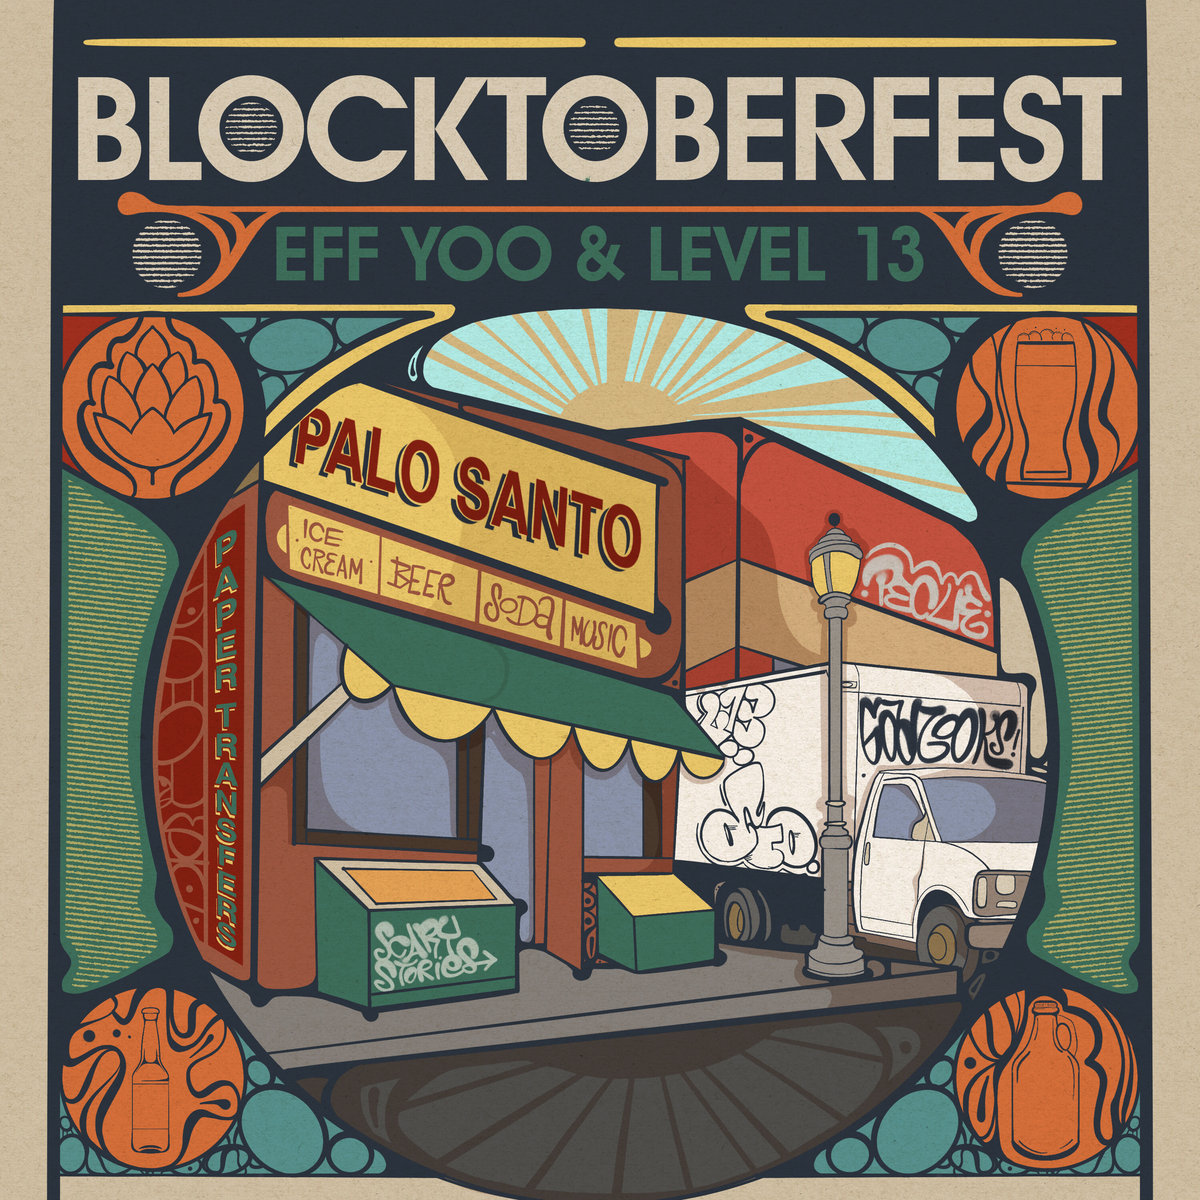 Eff_yoo_x_level_13_blocktoberfest